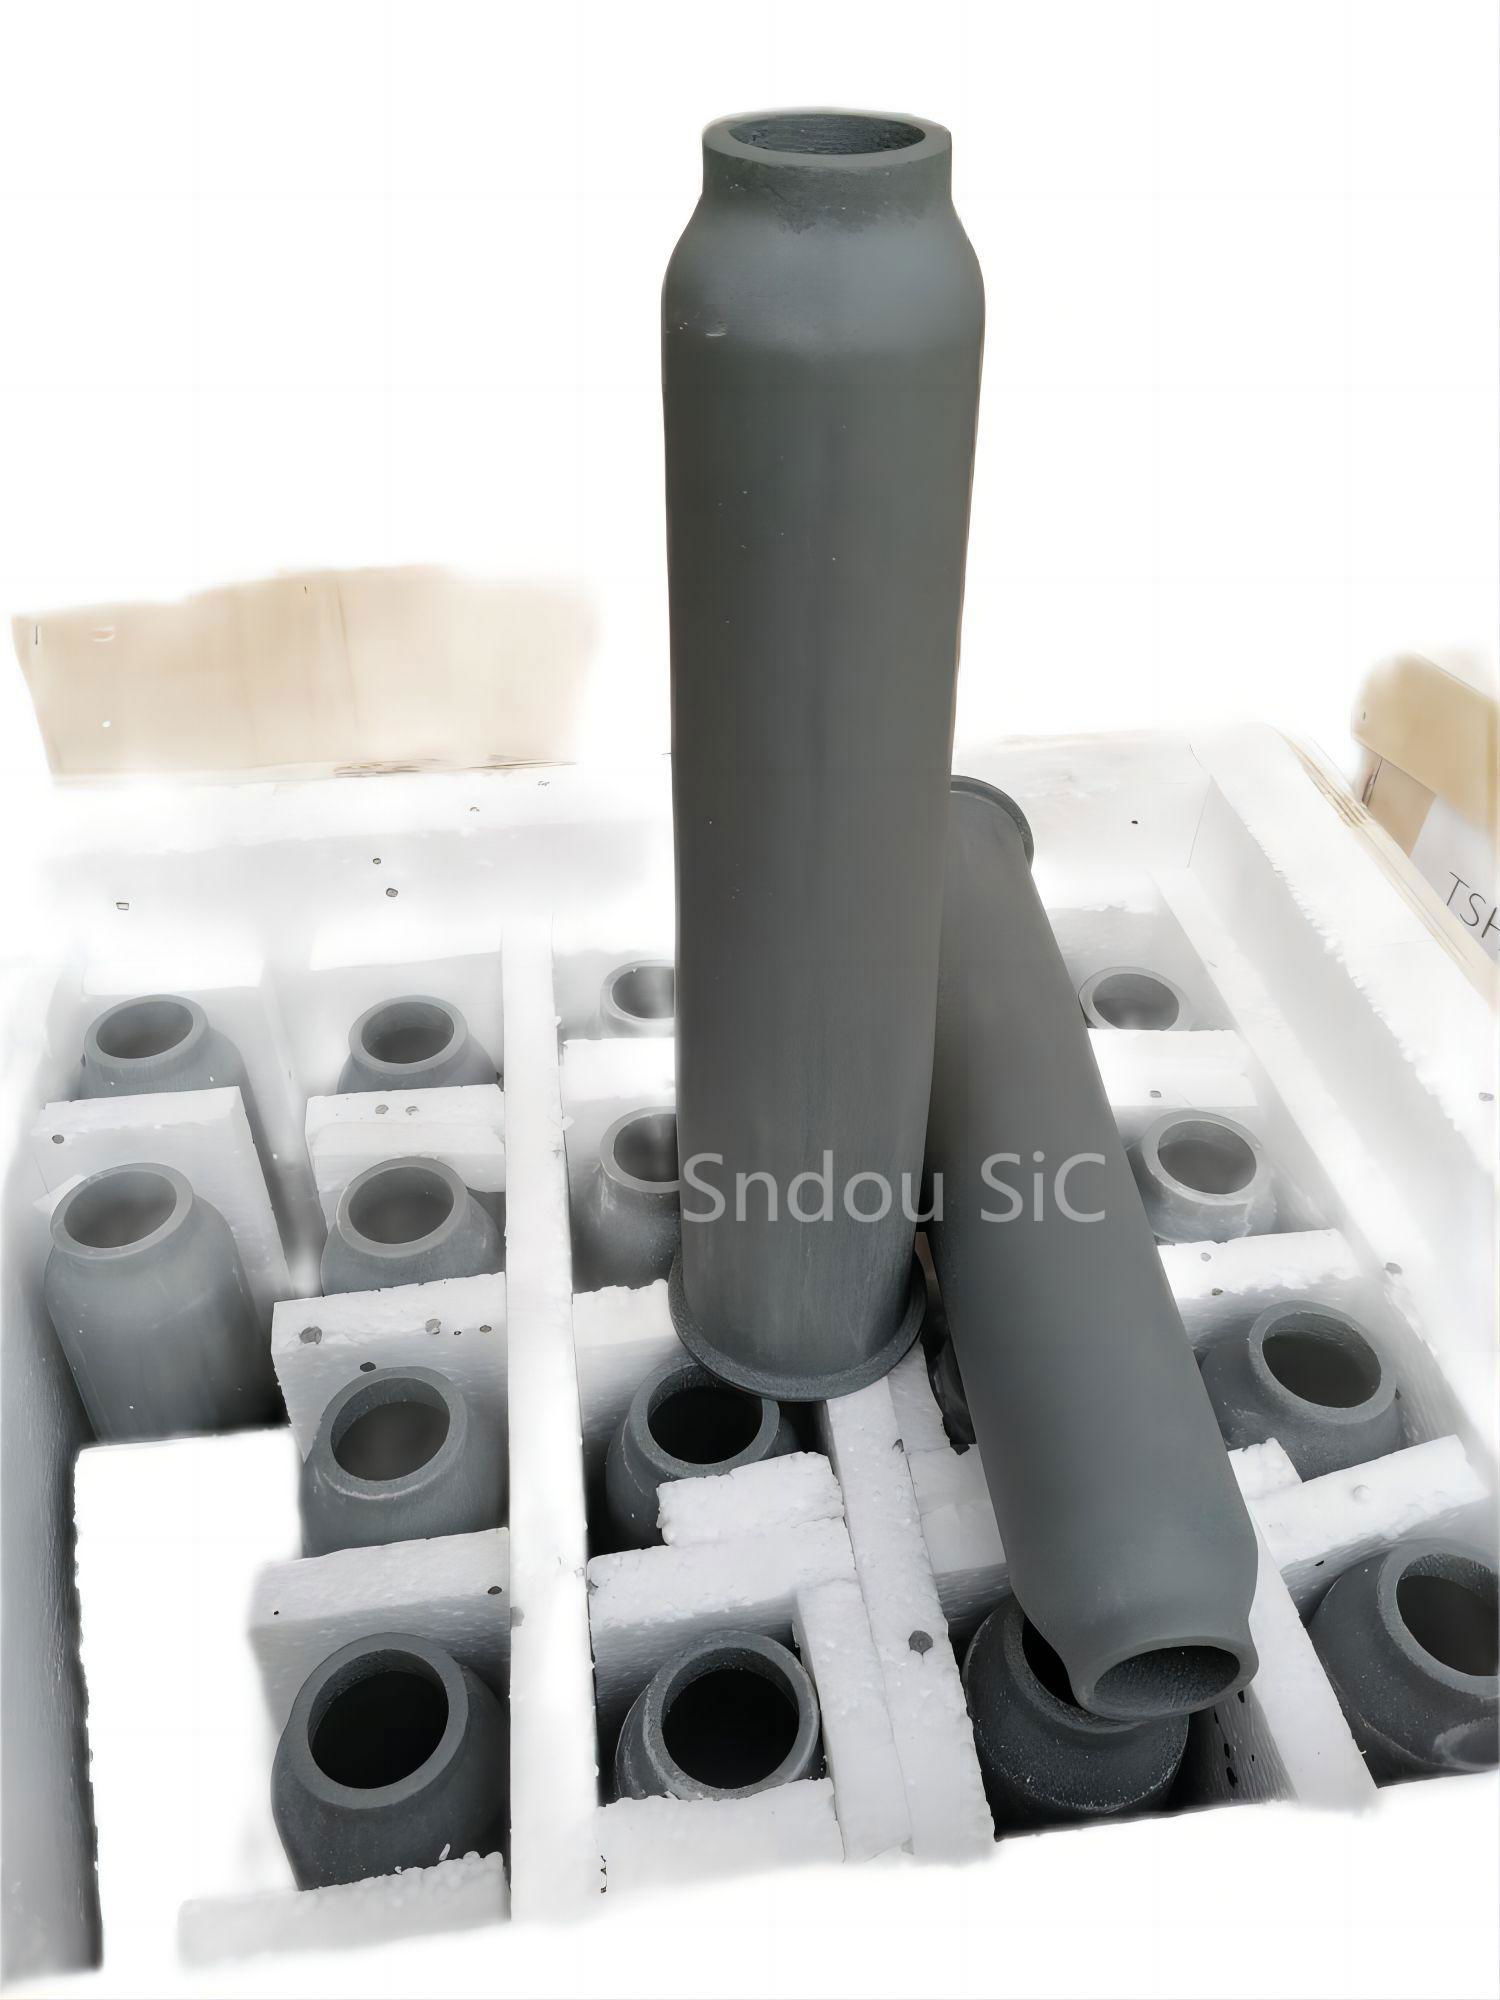 RSiC Burner Tubes by 1700C recrystallized SiC Ceramic 2